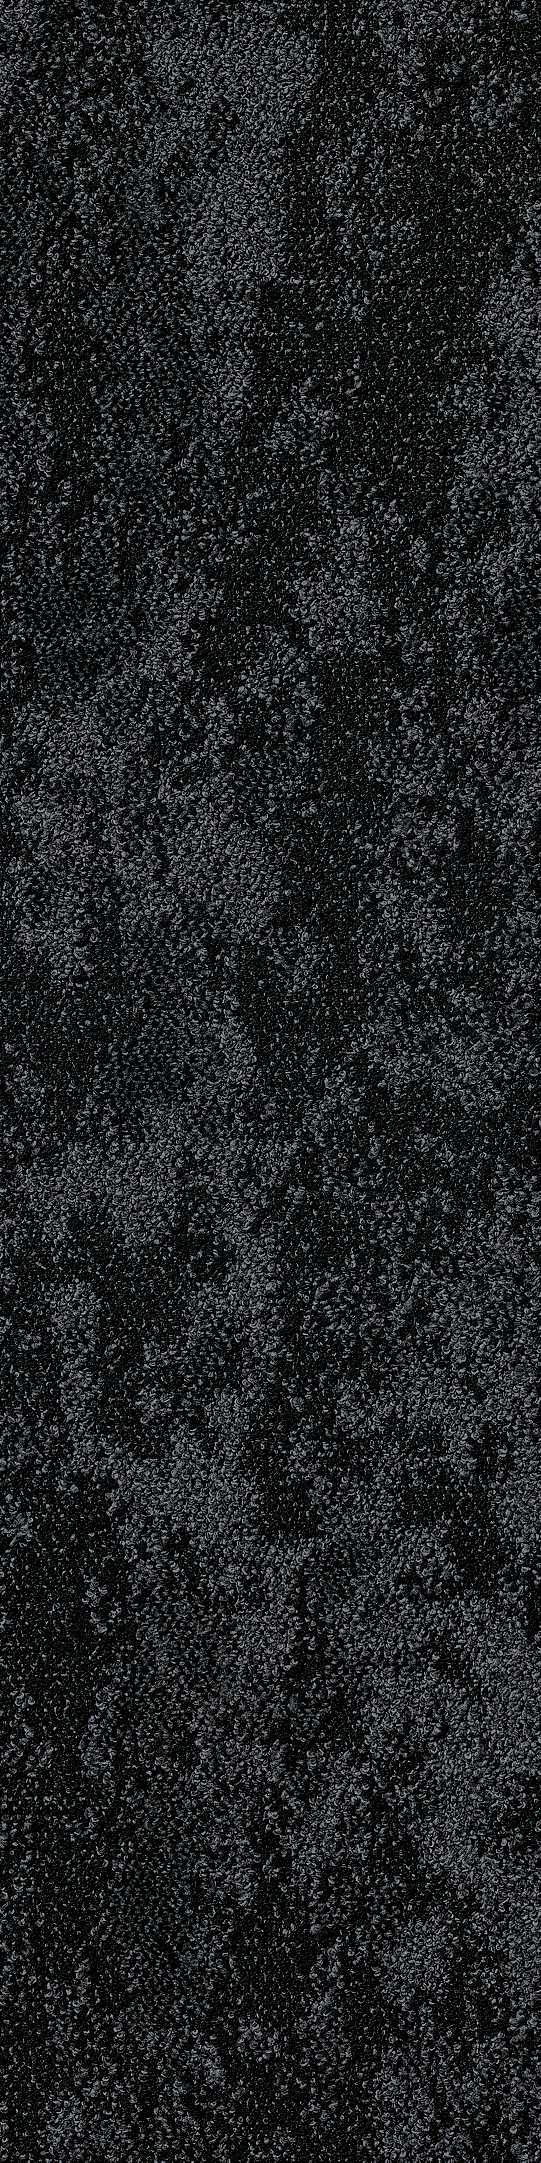 Shaw Seek Carpet Tile Vast